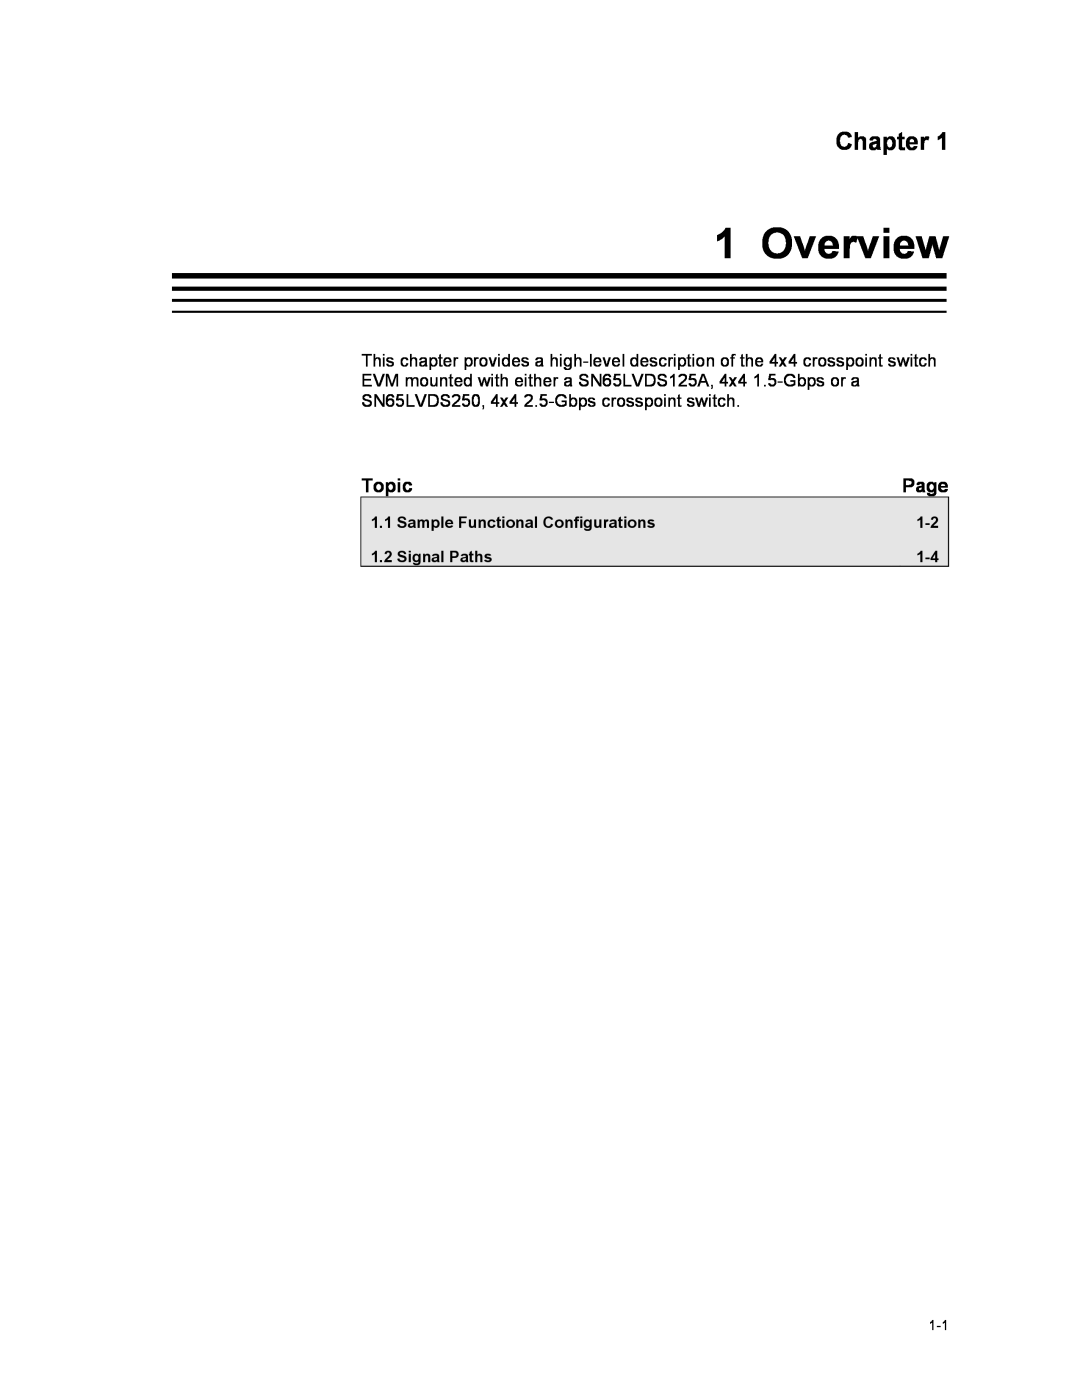 Texas Instruments HPL-D SLLU064A manual Overview, Chapter 